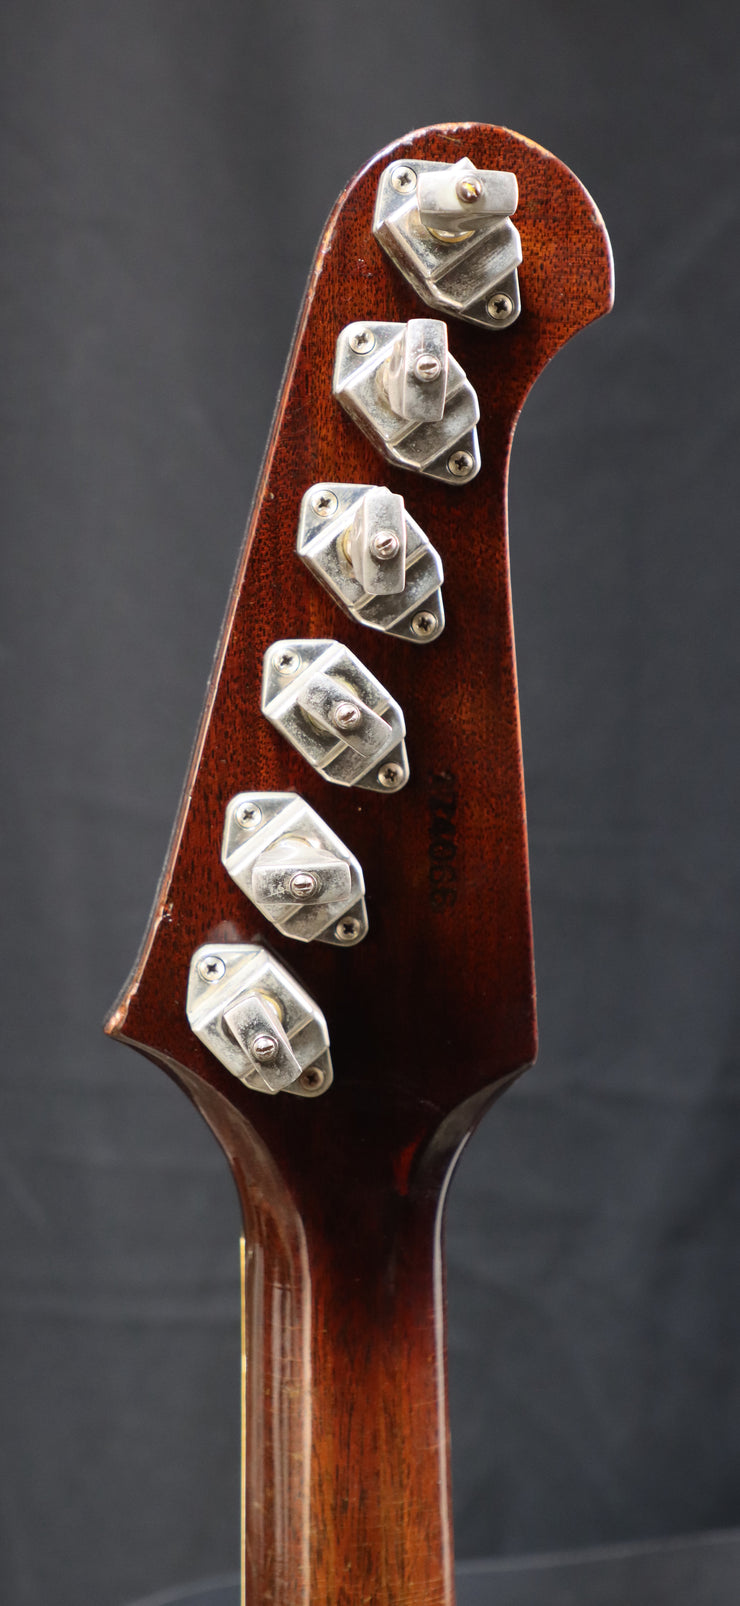 1964 Gibson Firebird V